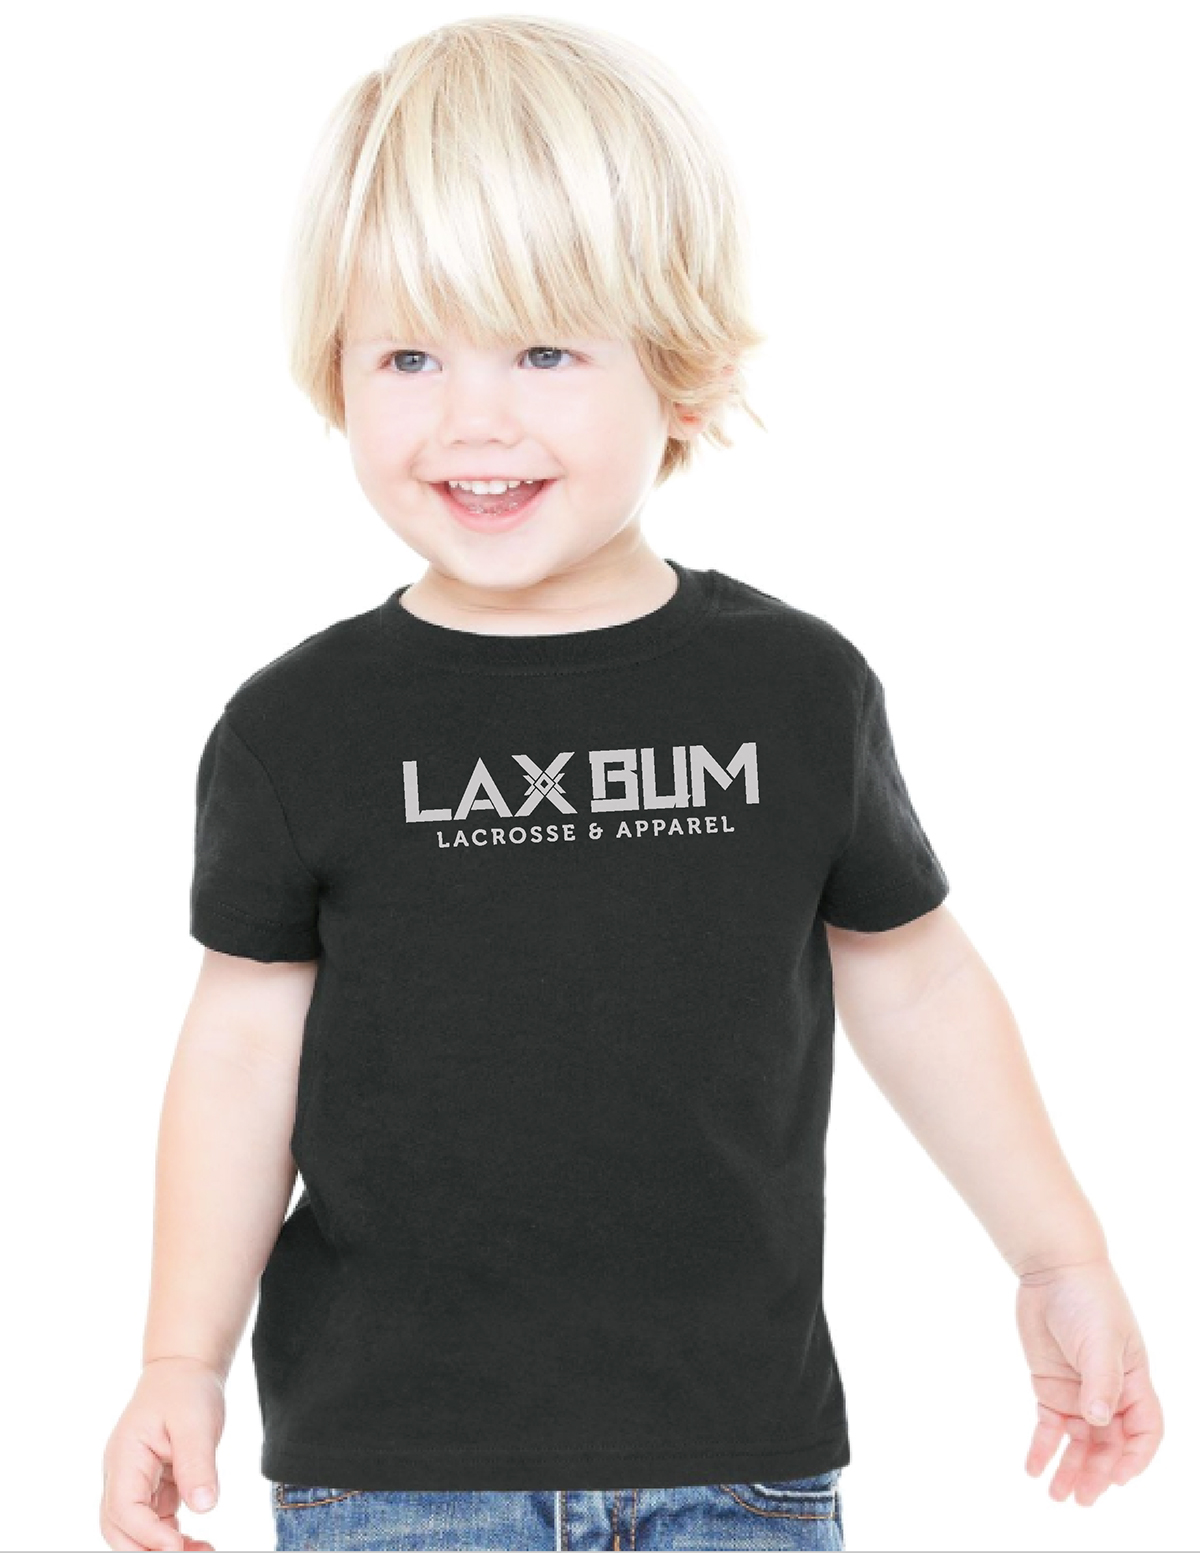 lacrosse LAX Lax bum design logo brand soccer football sports net sport apparel company